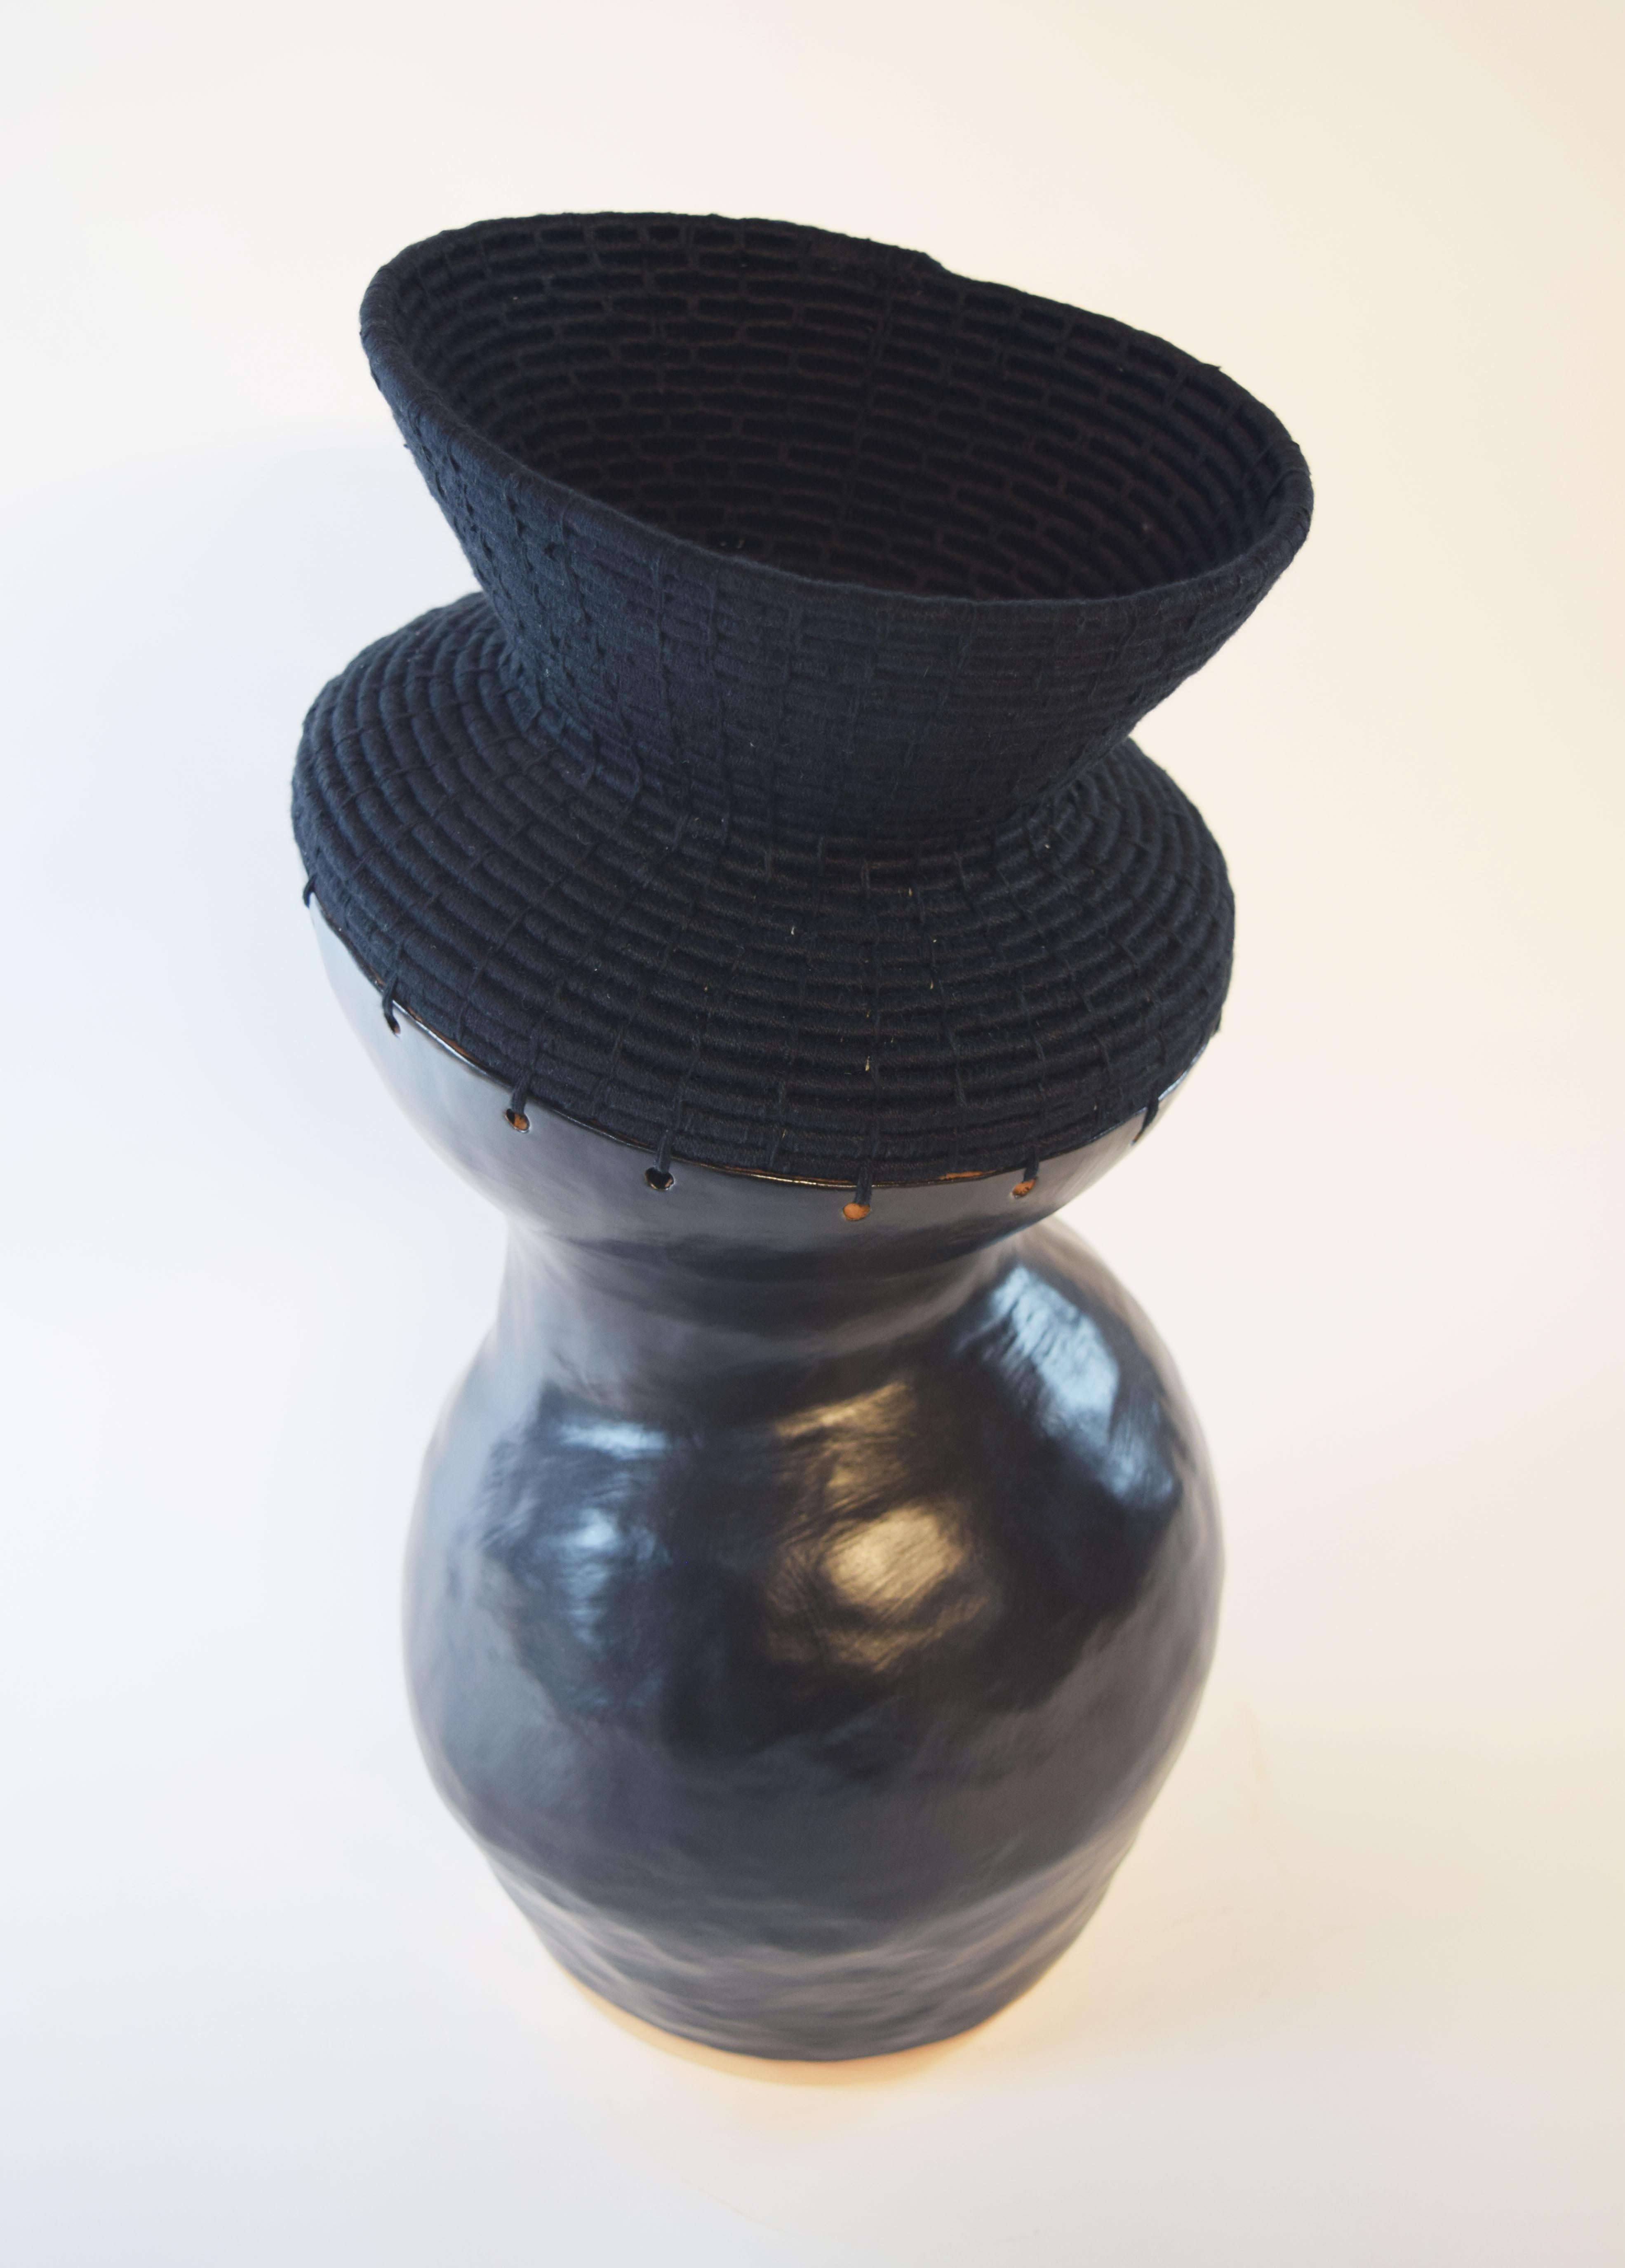 Hand-Crafted One of a Kind Ceramic & Woven Fiber Vessel #761, Satin Black Glaze, Black Cotton For Sale